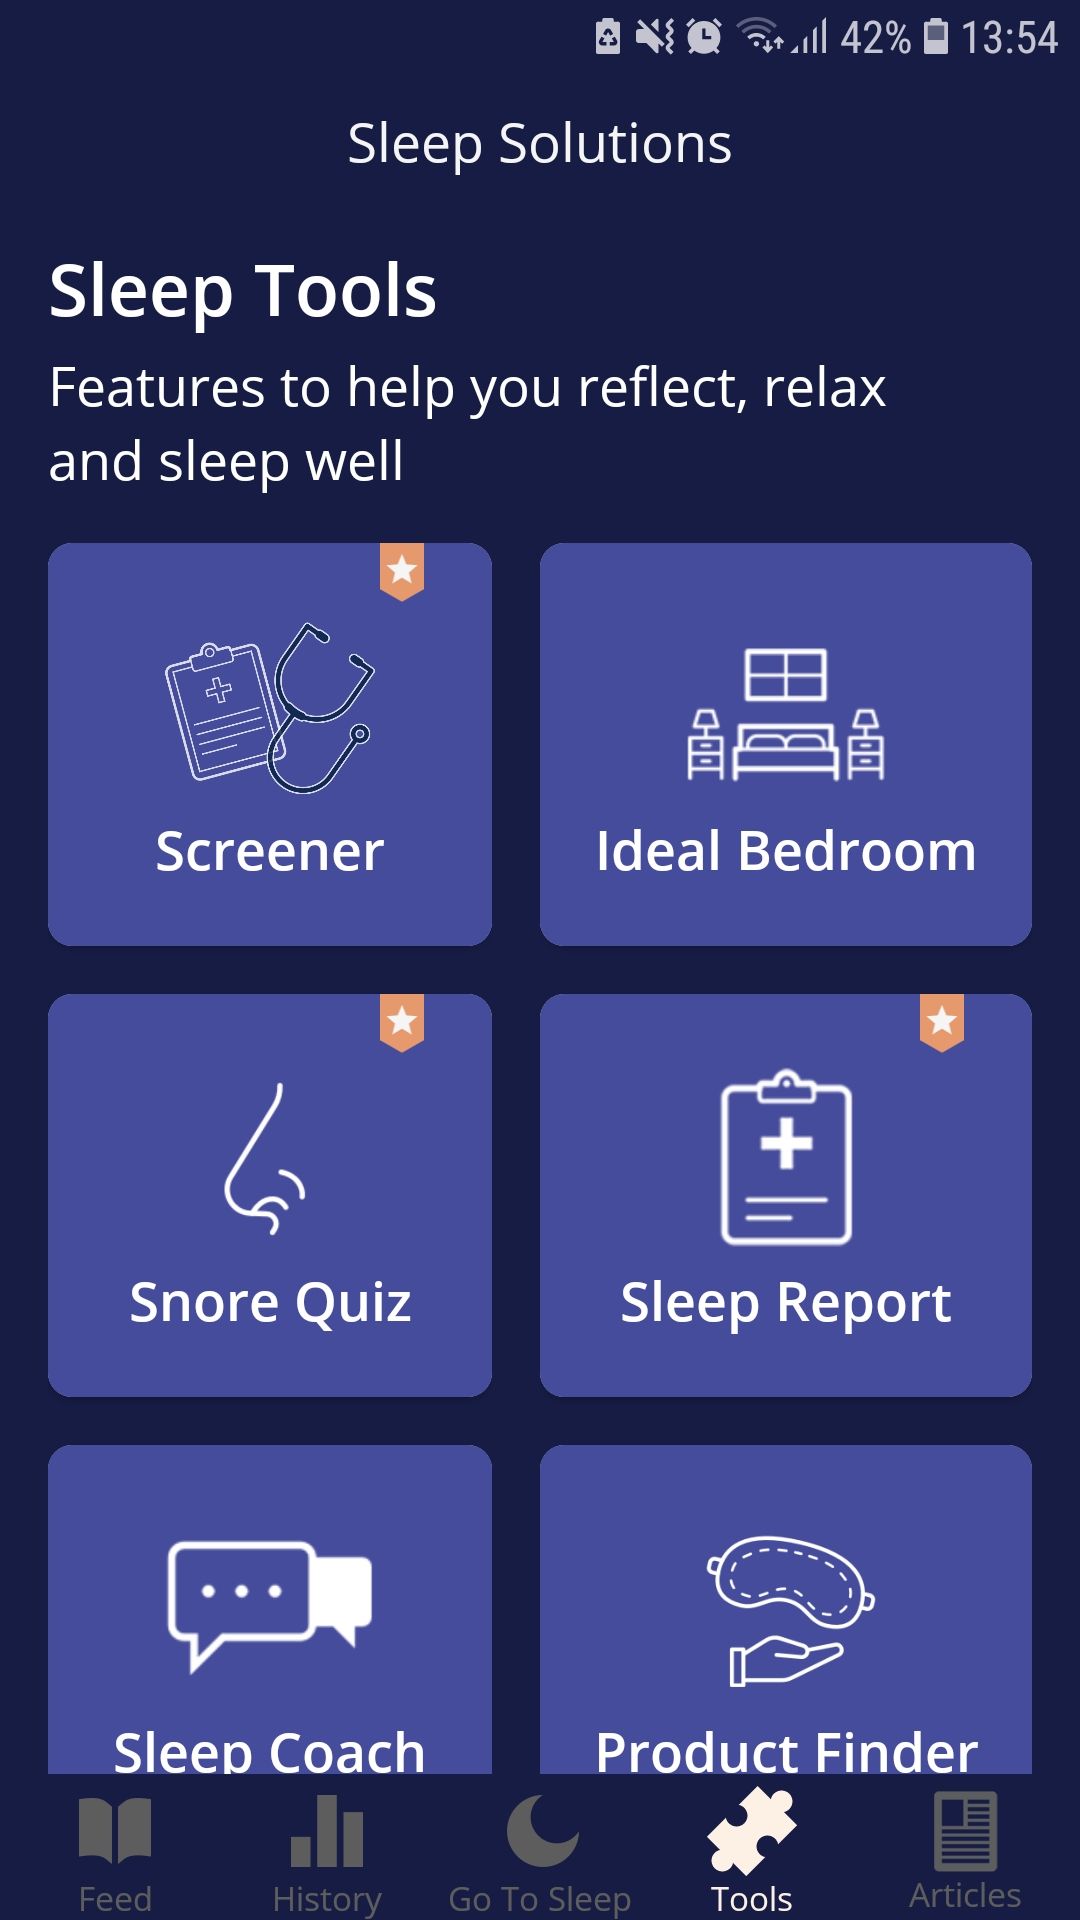 SleepScore tools sleep tracking mobile app